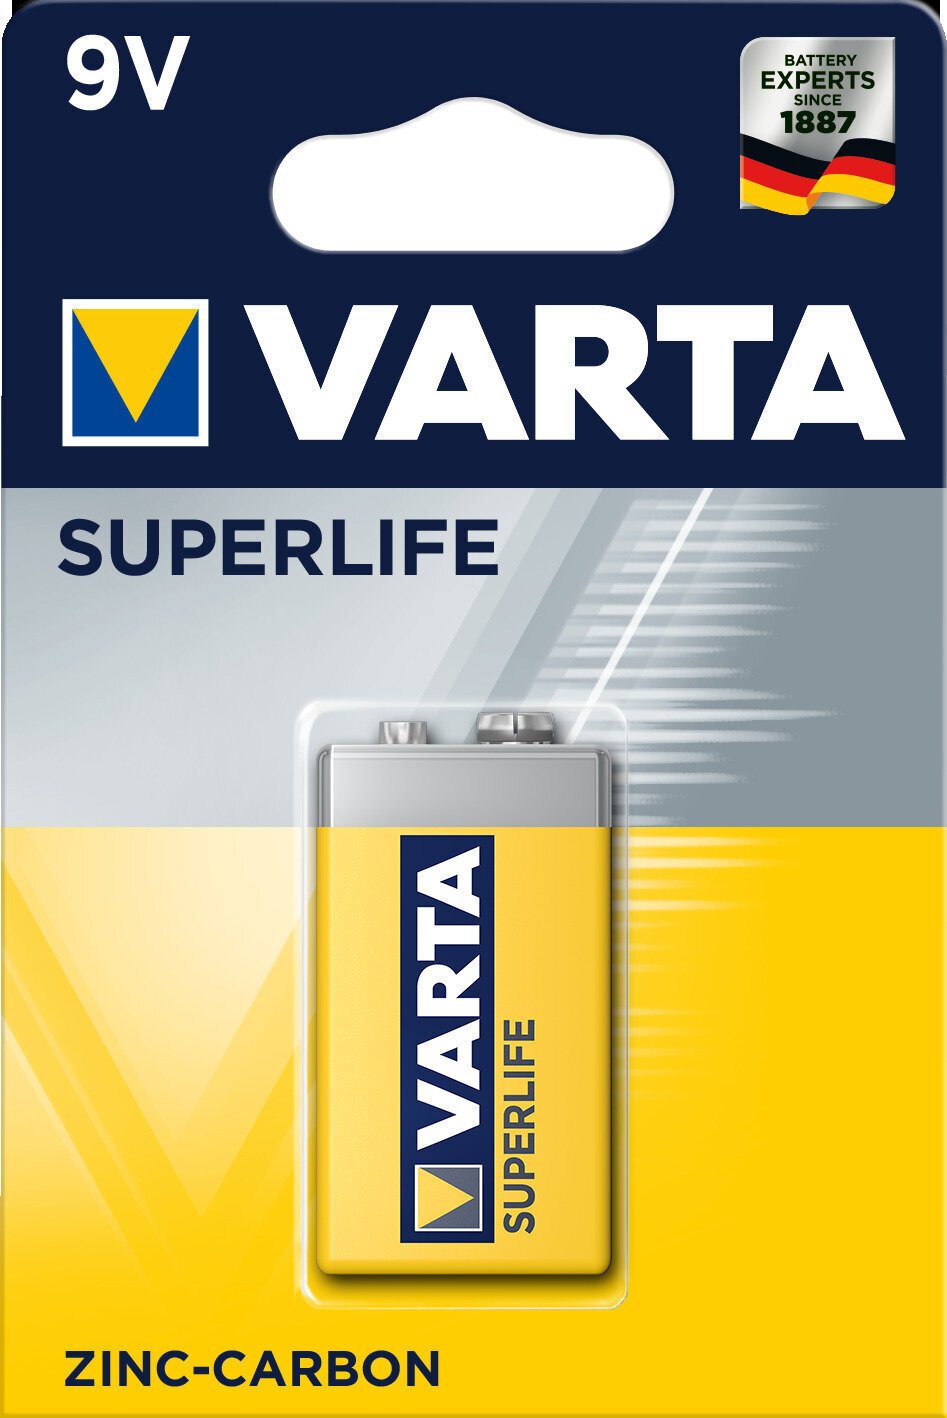 9V Bateria Varta 9V Bateria 6F22 Superlife